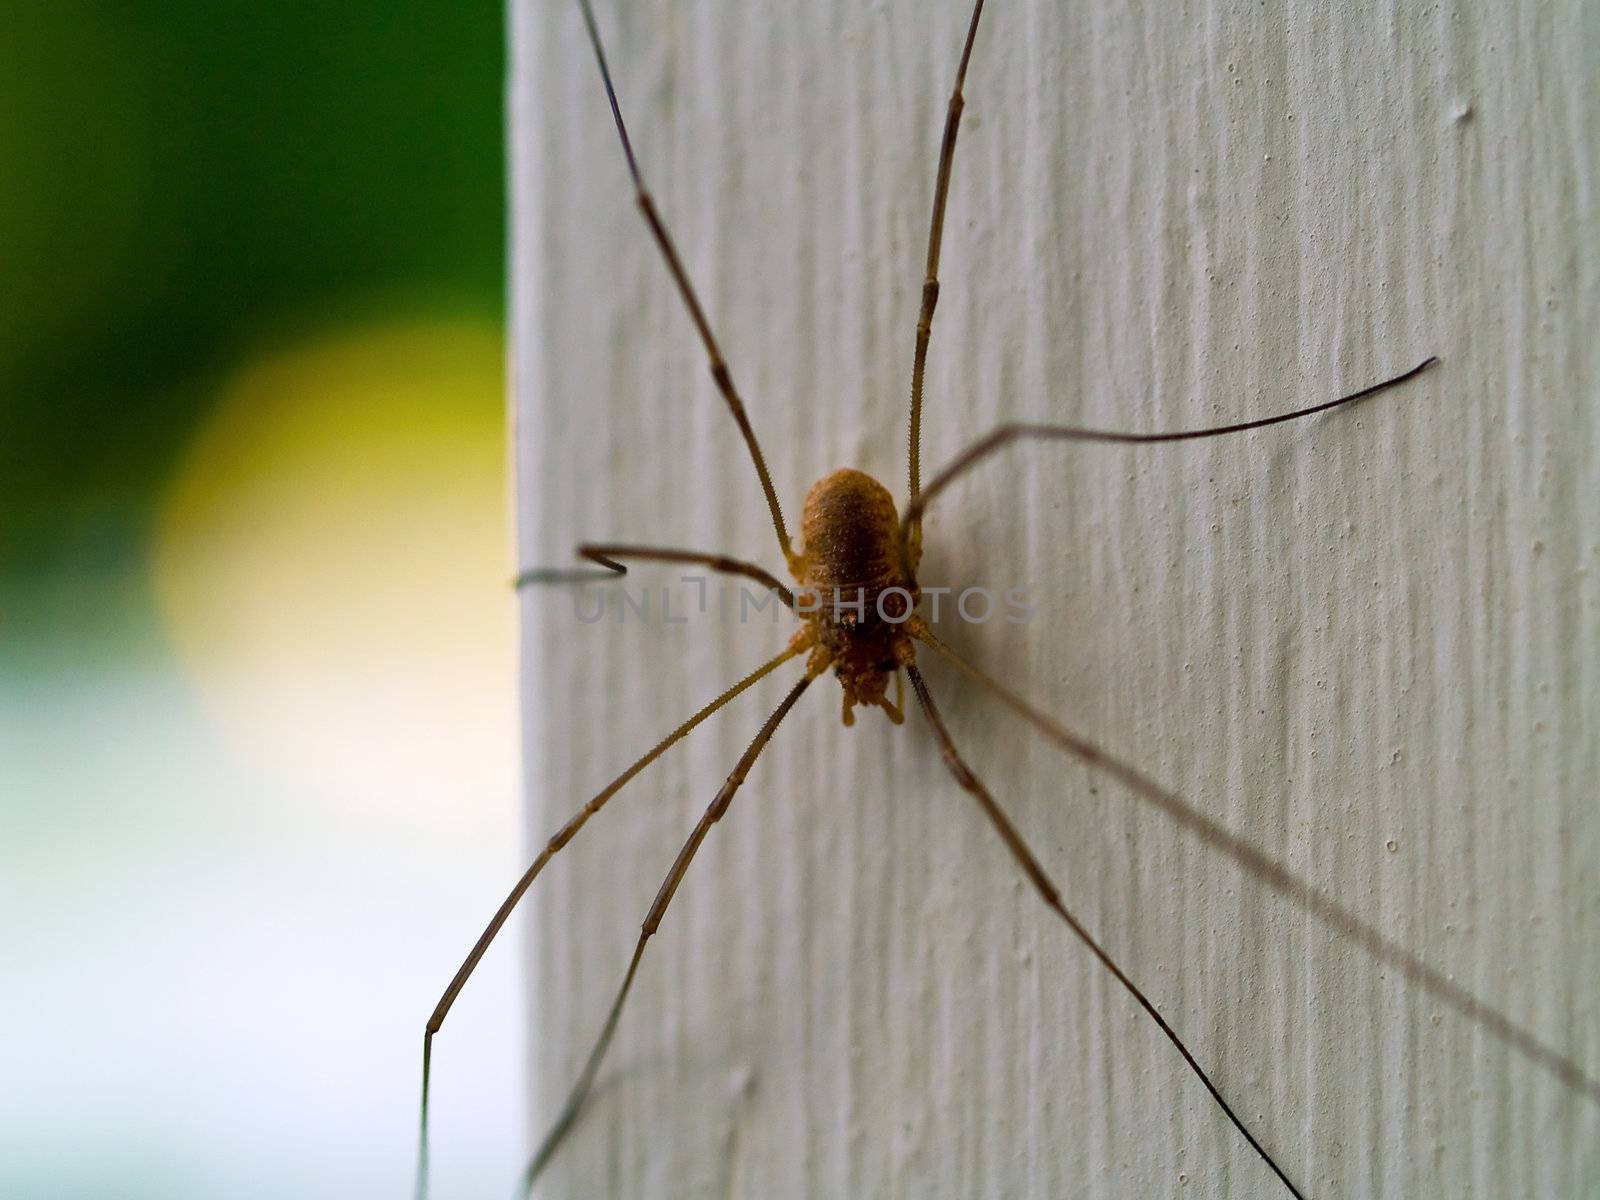 A daddy longleg spider macro close up